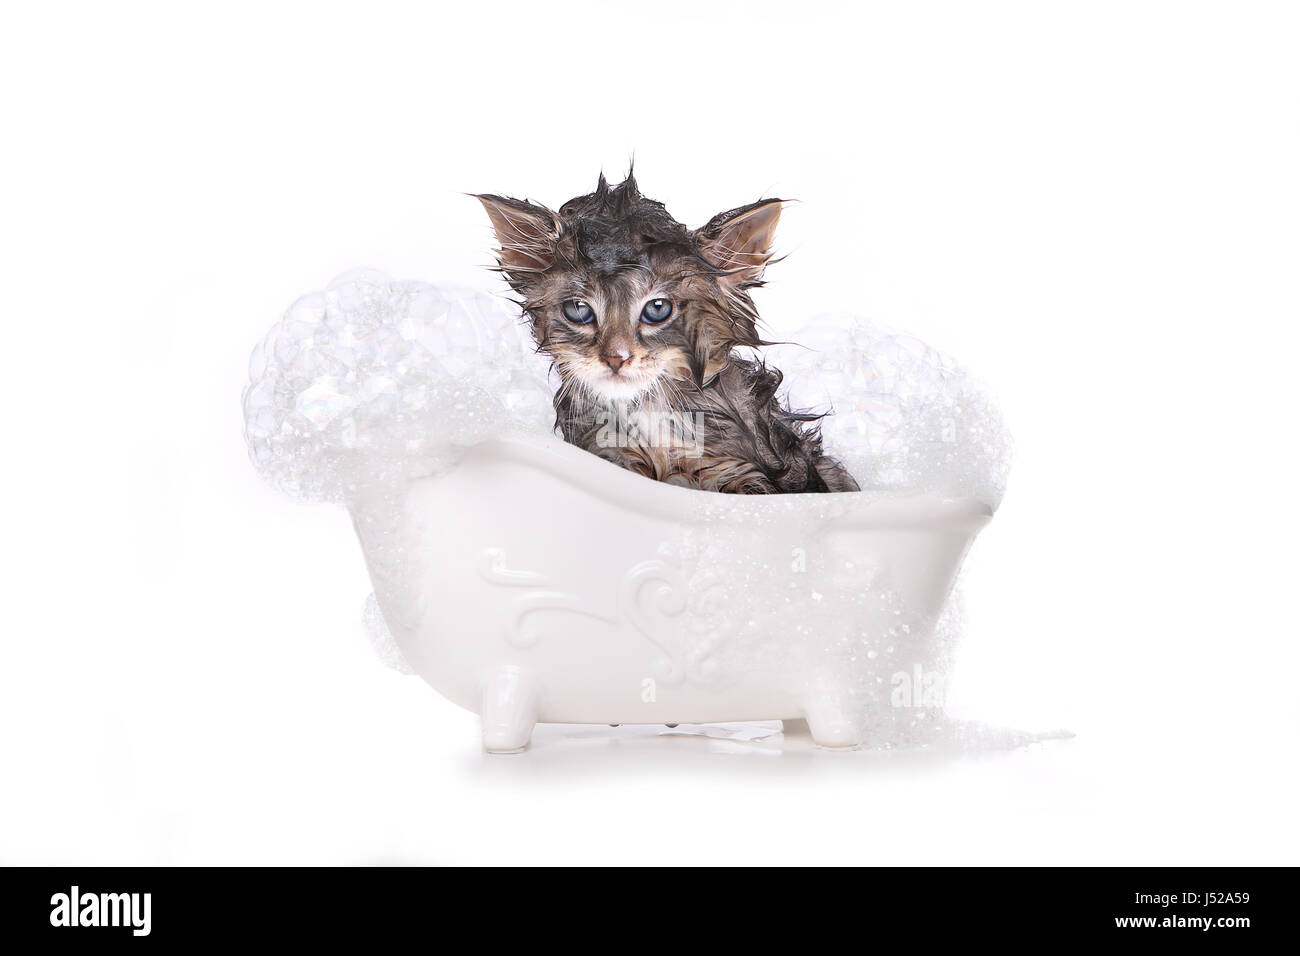 Adorable Dripping Wet Kitten on White Stock Photo